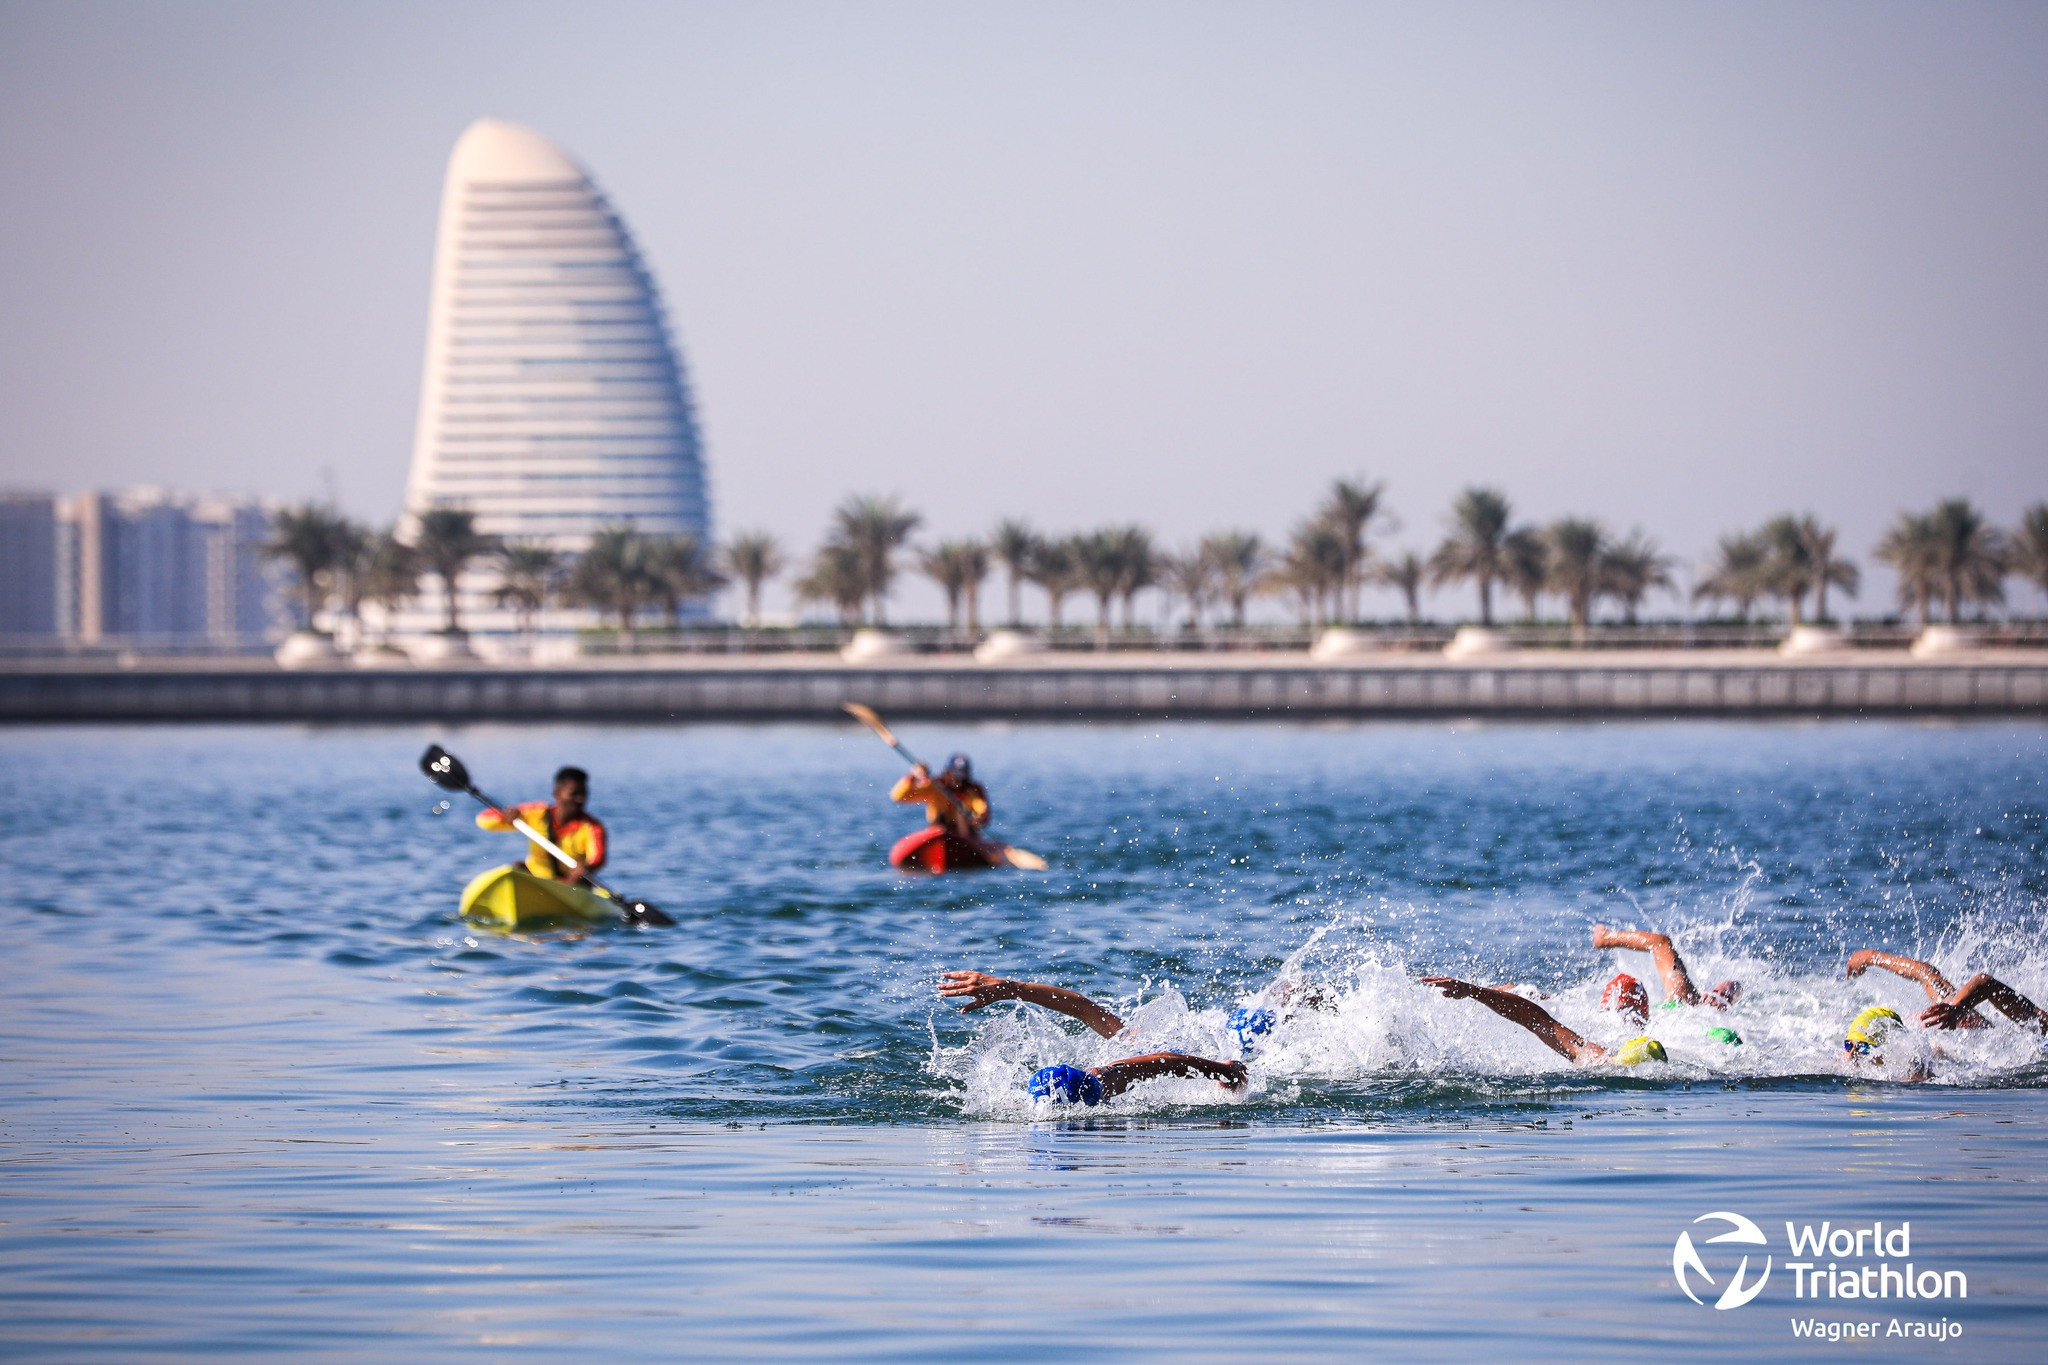 The World Triathlon Championship Finals is due to conclude tomorrow in Abu Dhabi ©World Triathlon